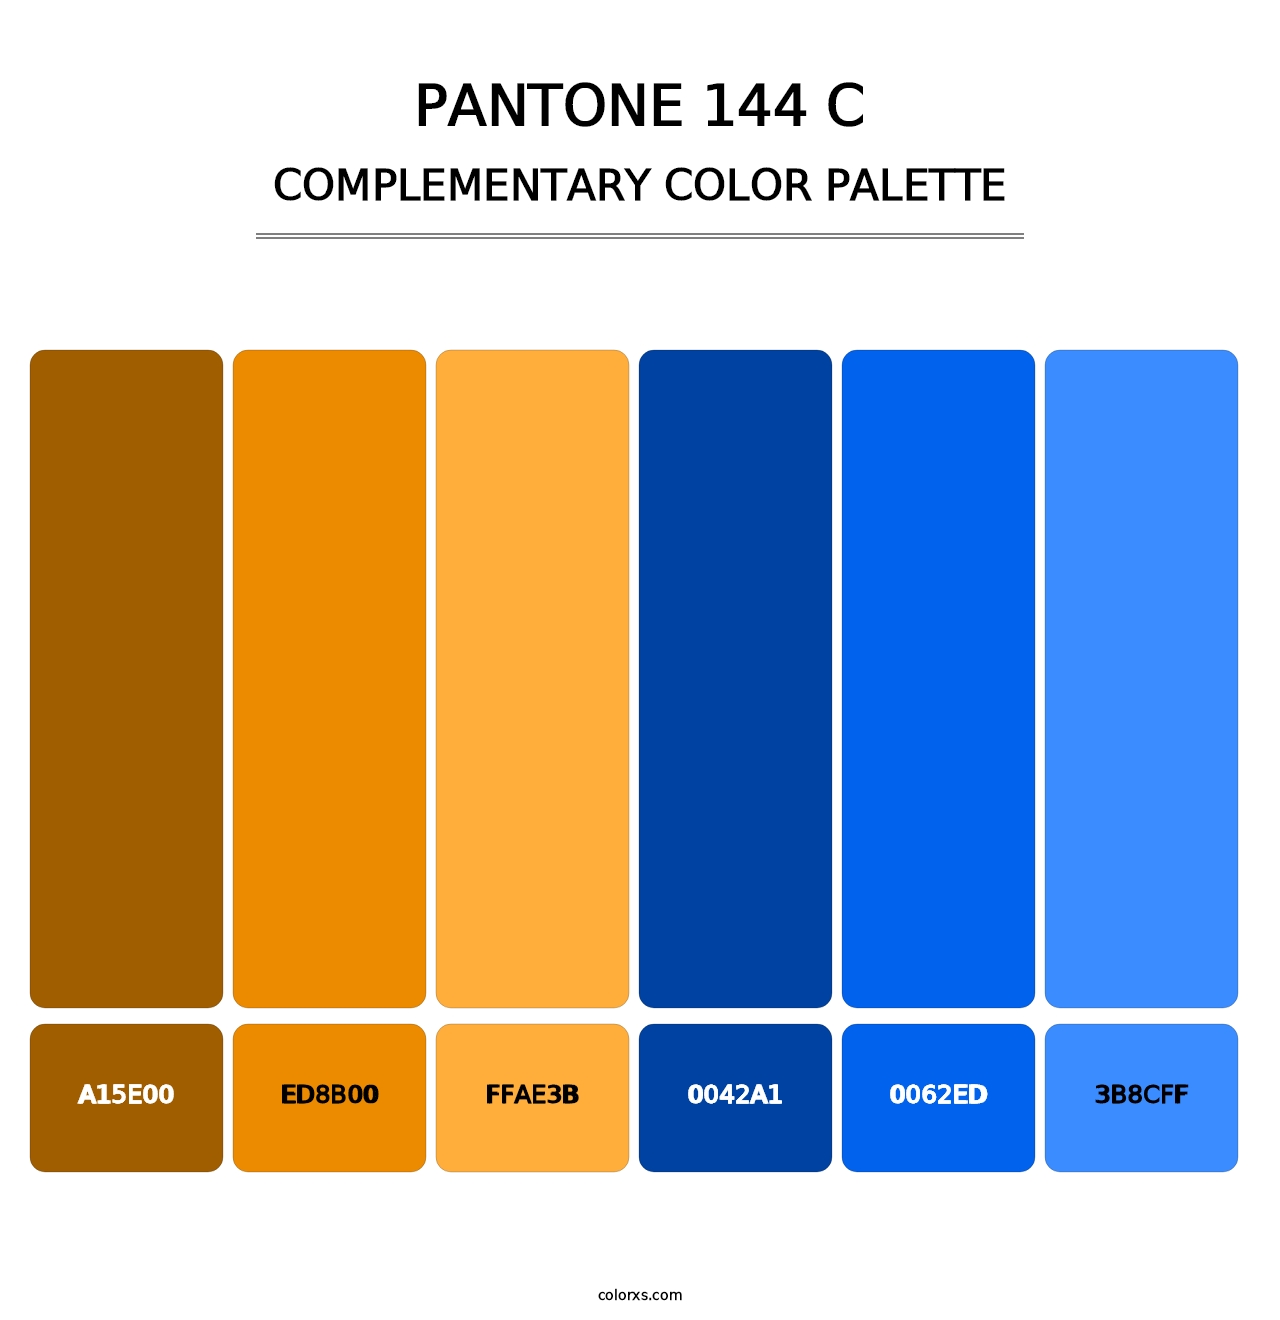 PANTONE 144 C - Complementary Color Palette